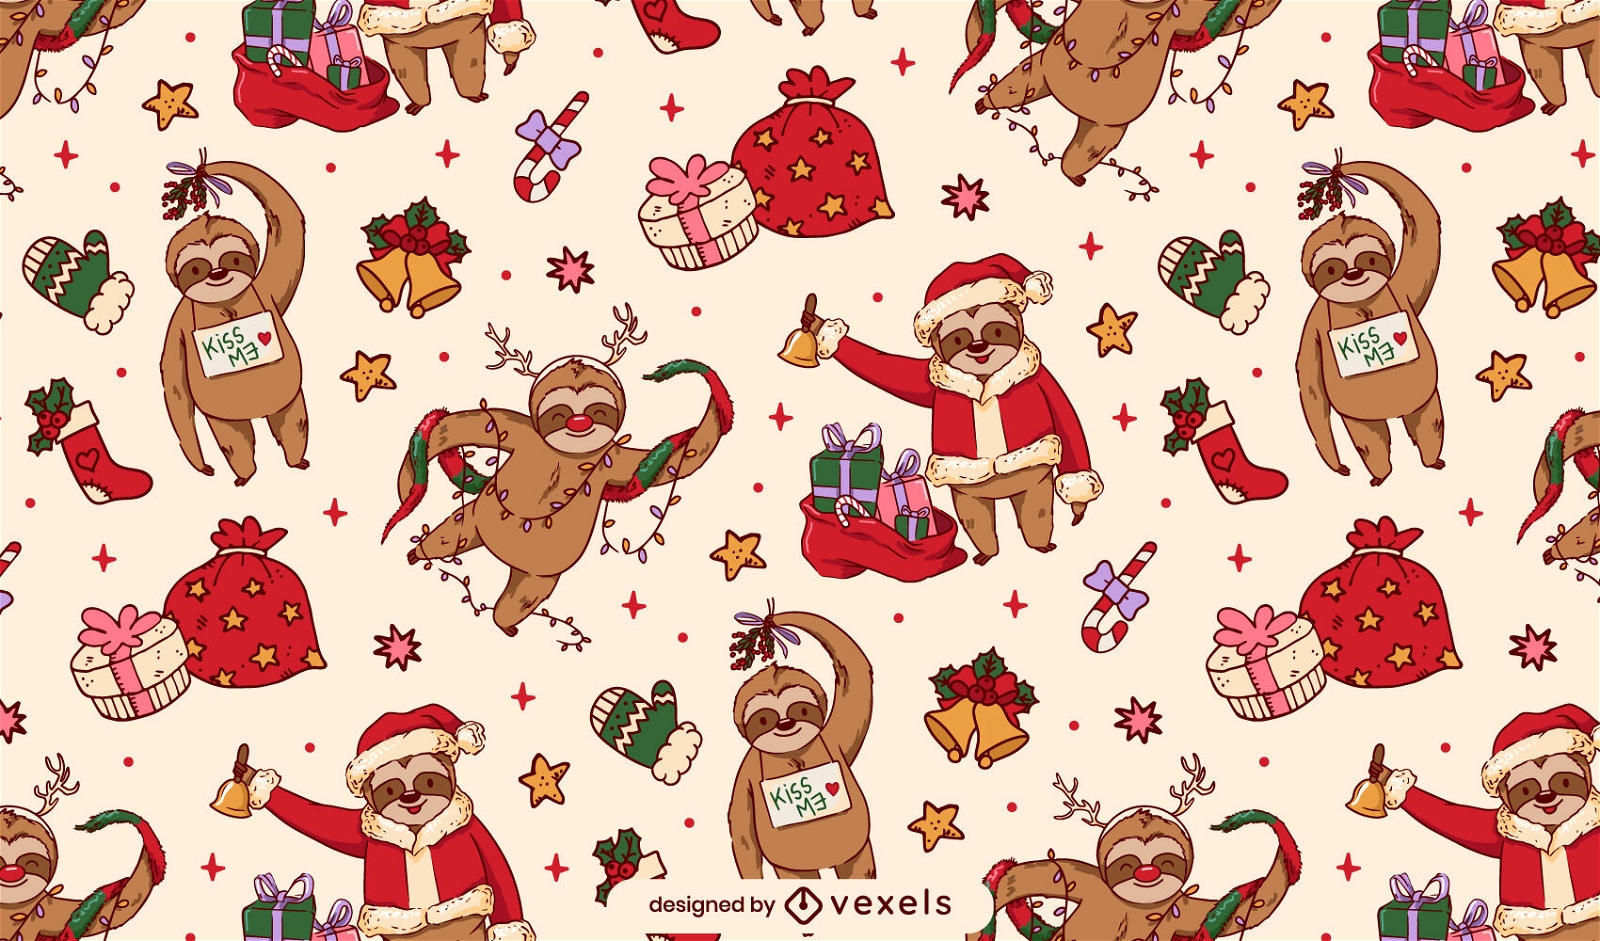 Lovely Christmas sloth pattern design